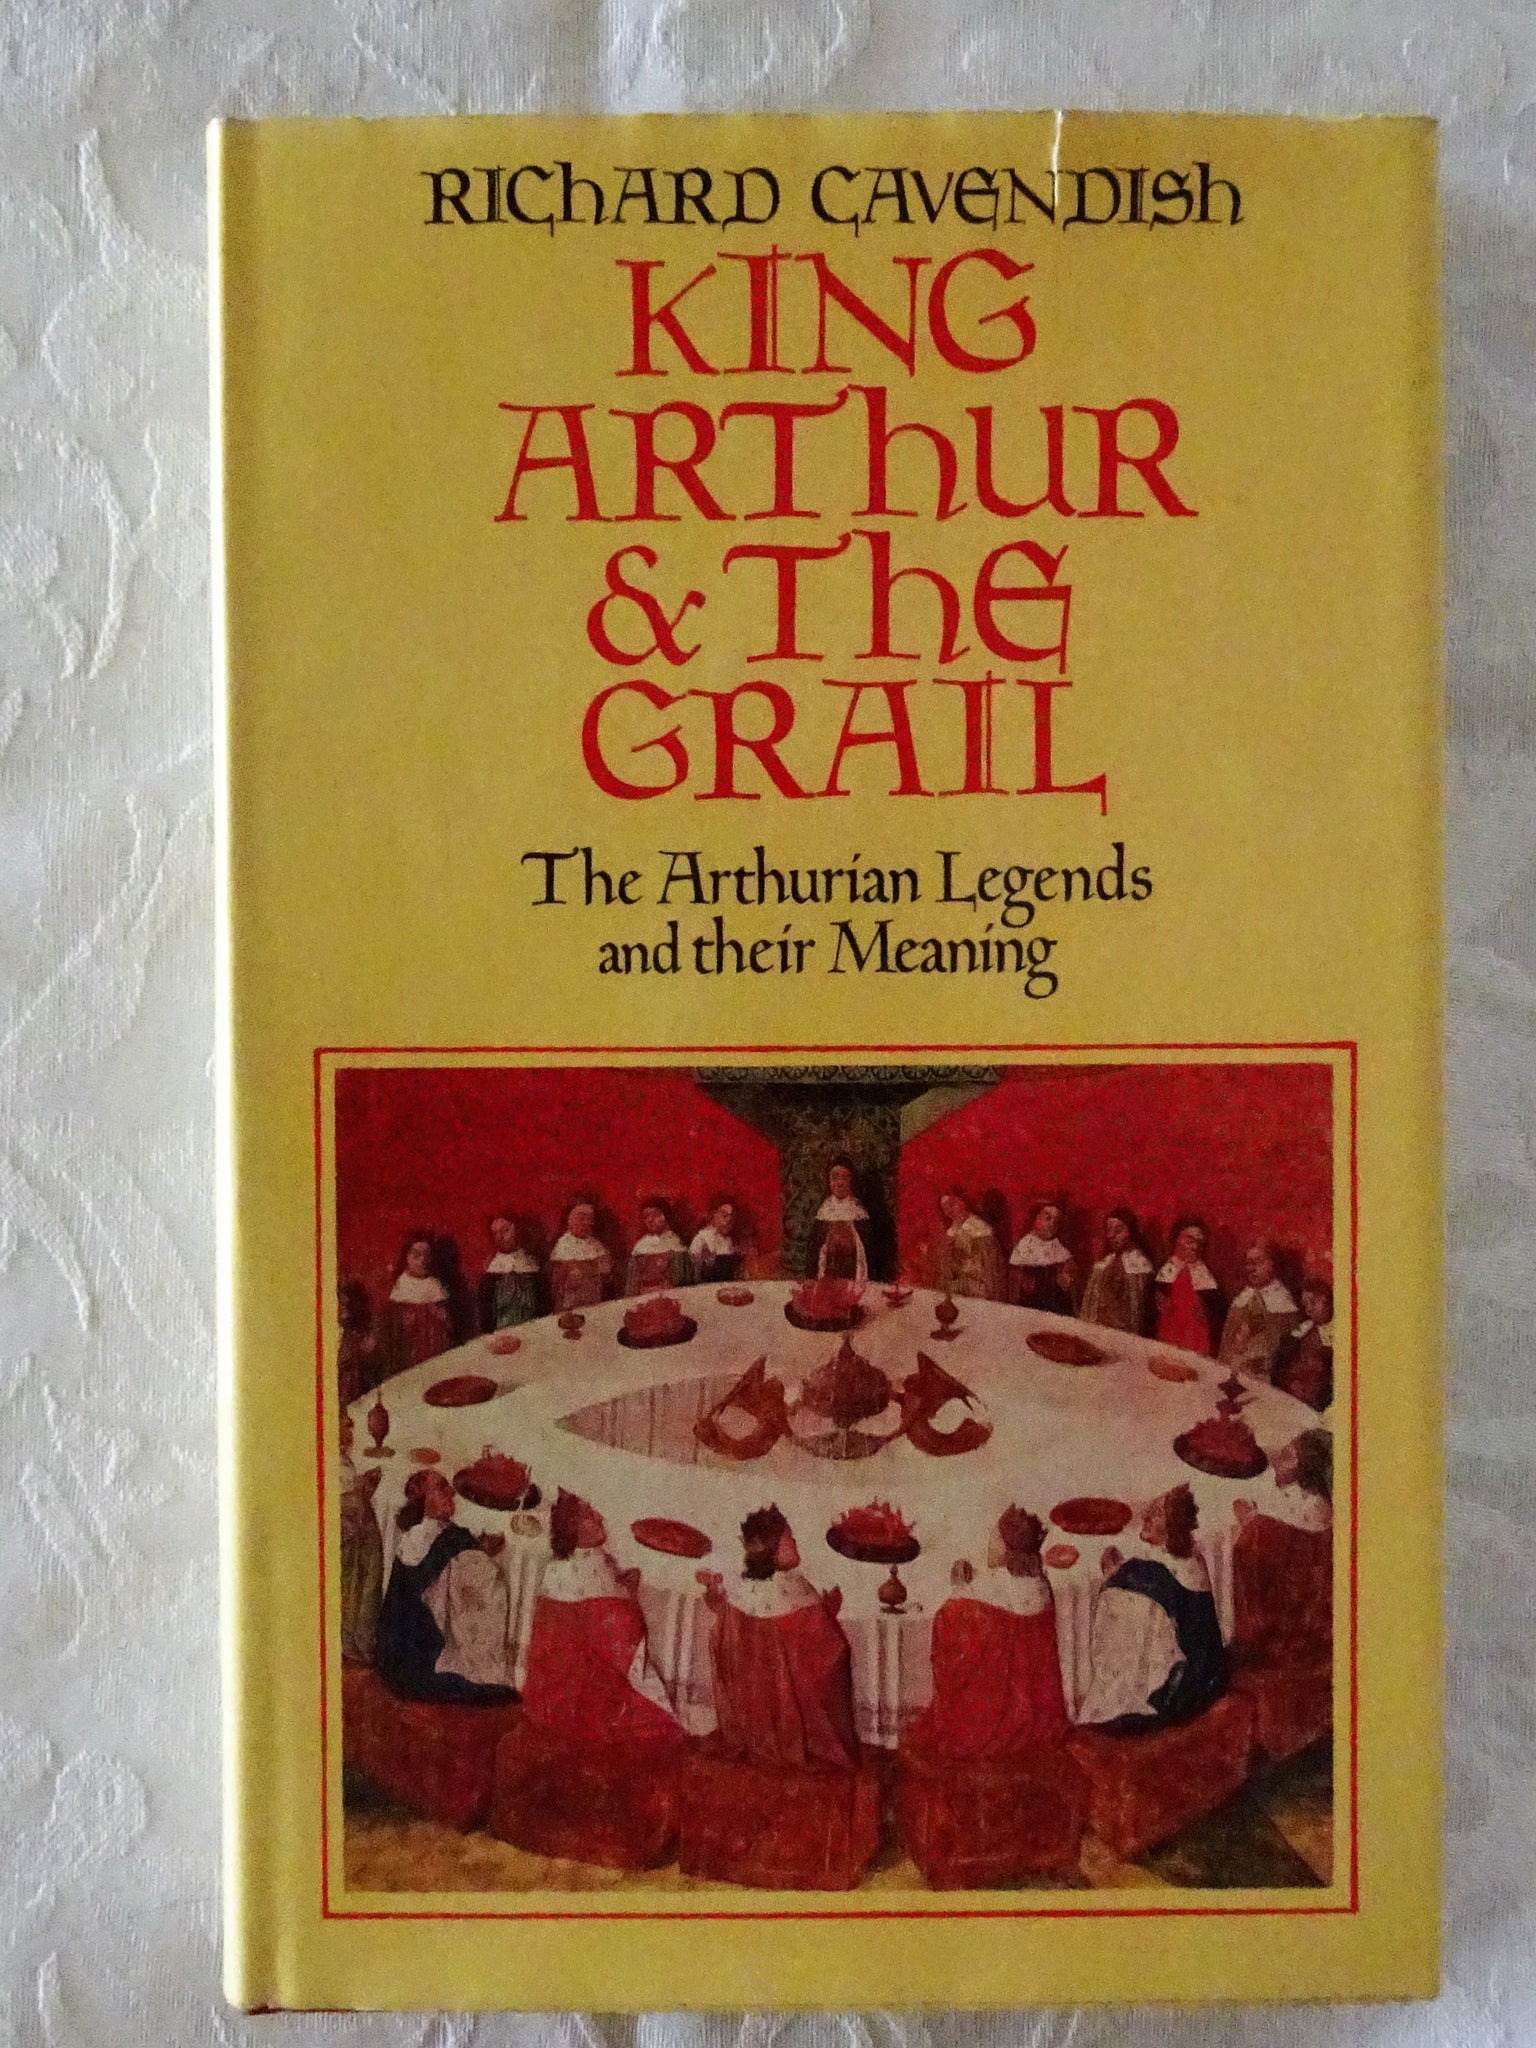 King Arthur The Grail By Richard Cavendish Morgan S Rare Books